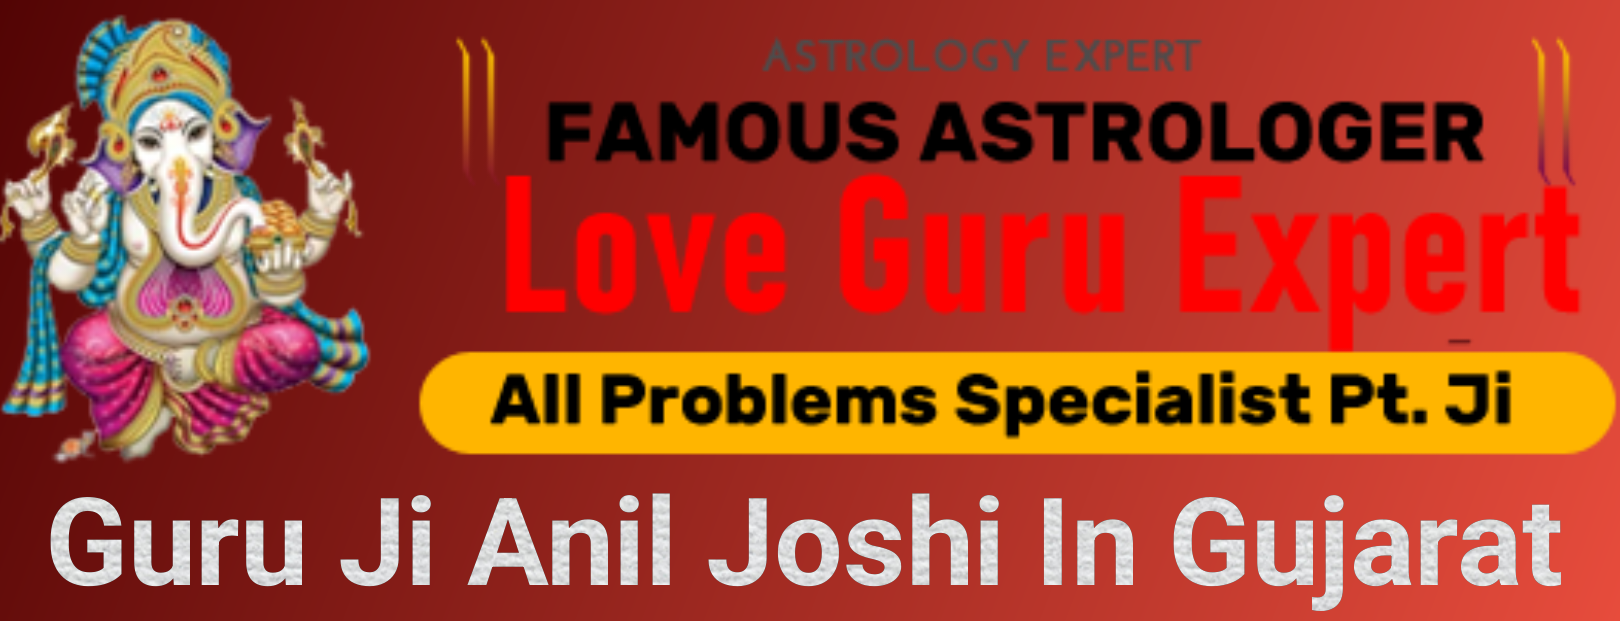 Astrologer  Anil Joshi Love Astrologer